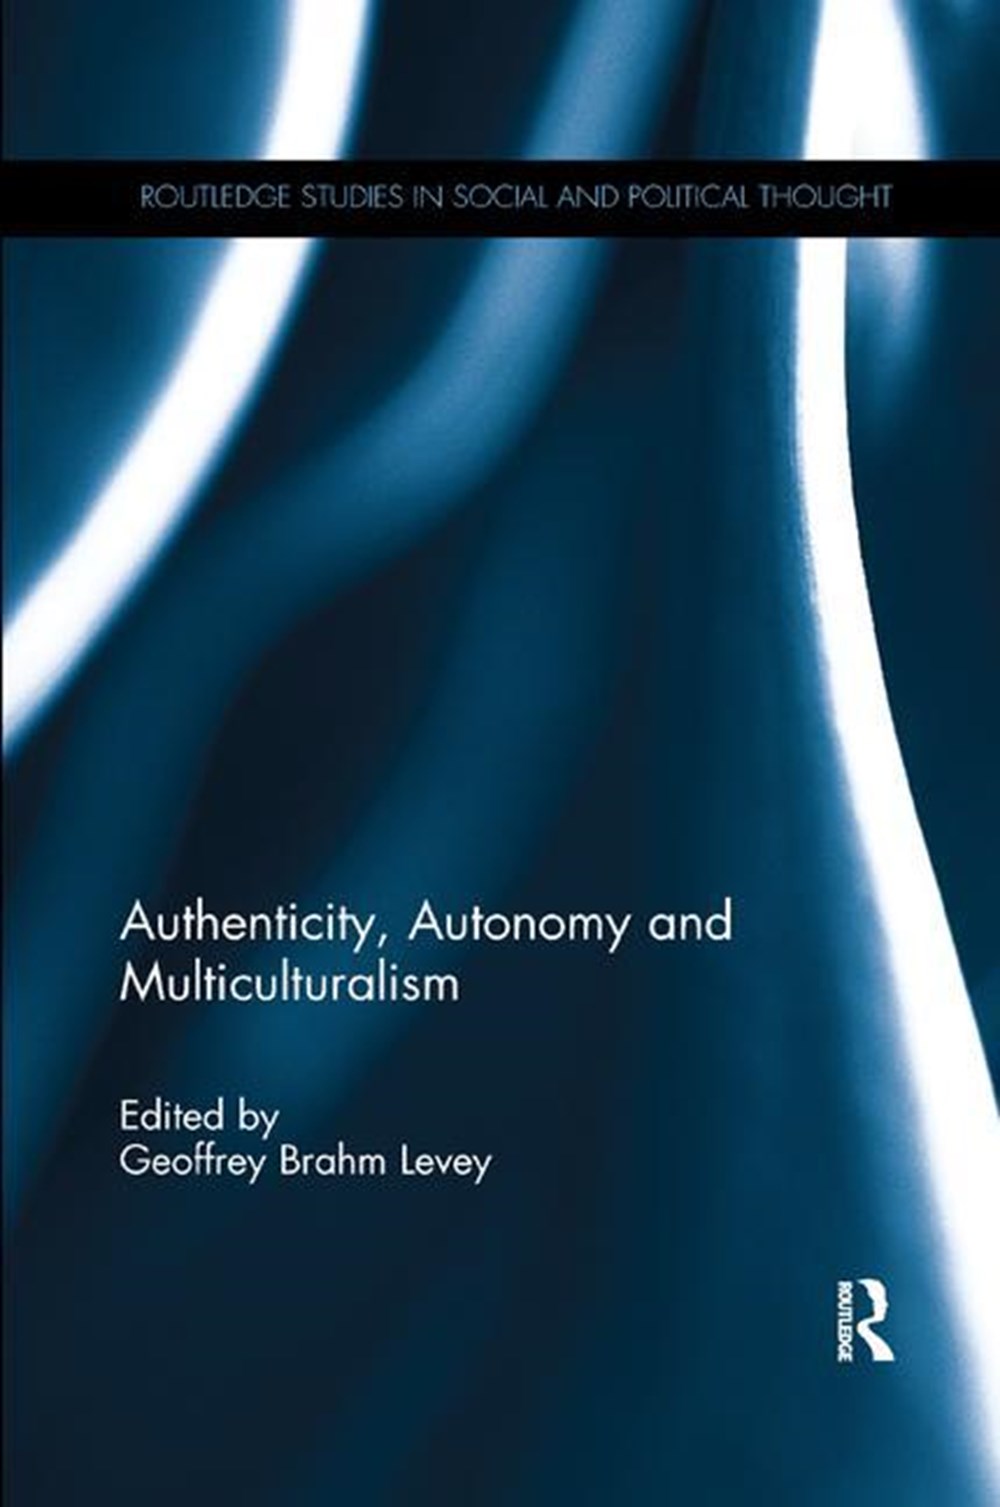 Authenticity, Autonomy and Multiculturalism